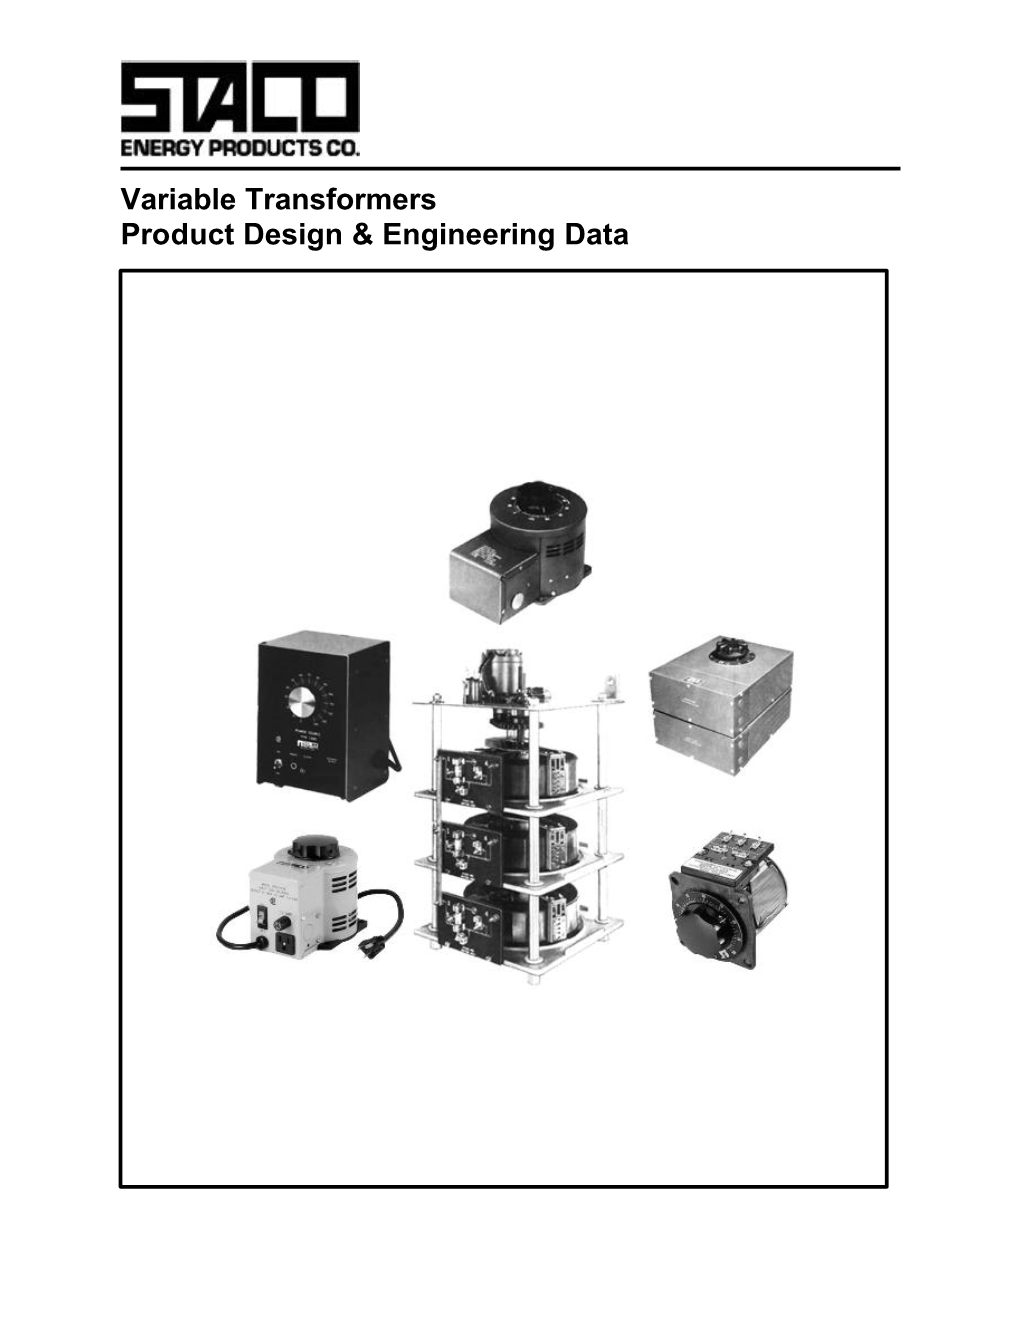 Variable Transformer Design Information